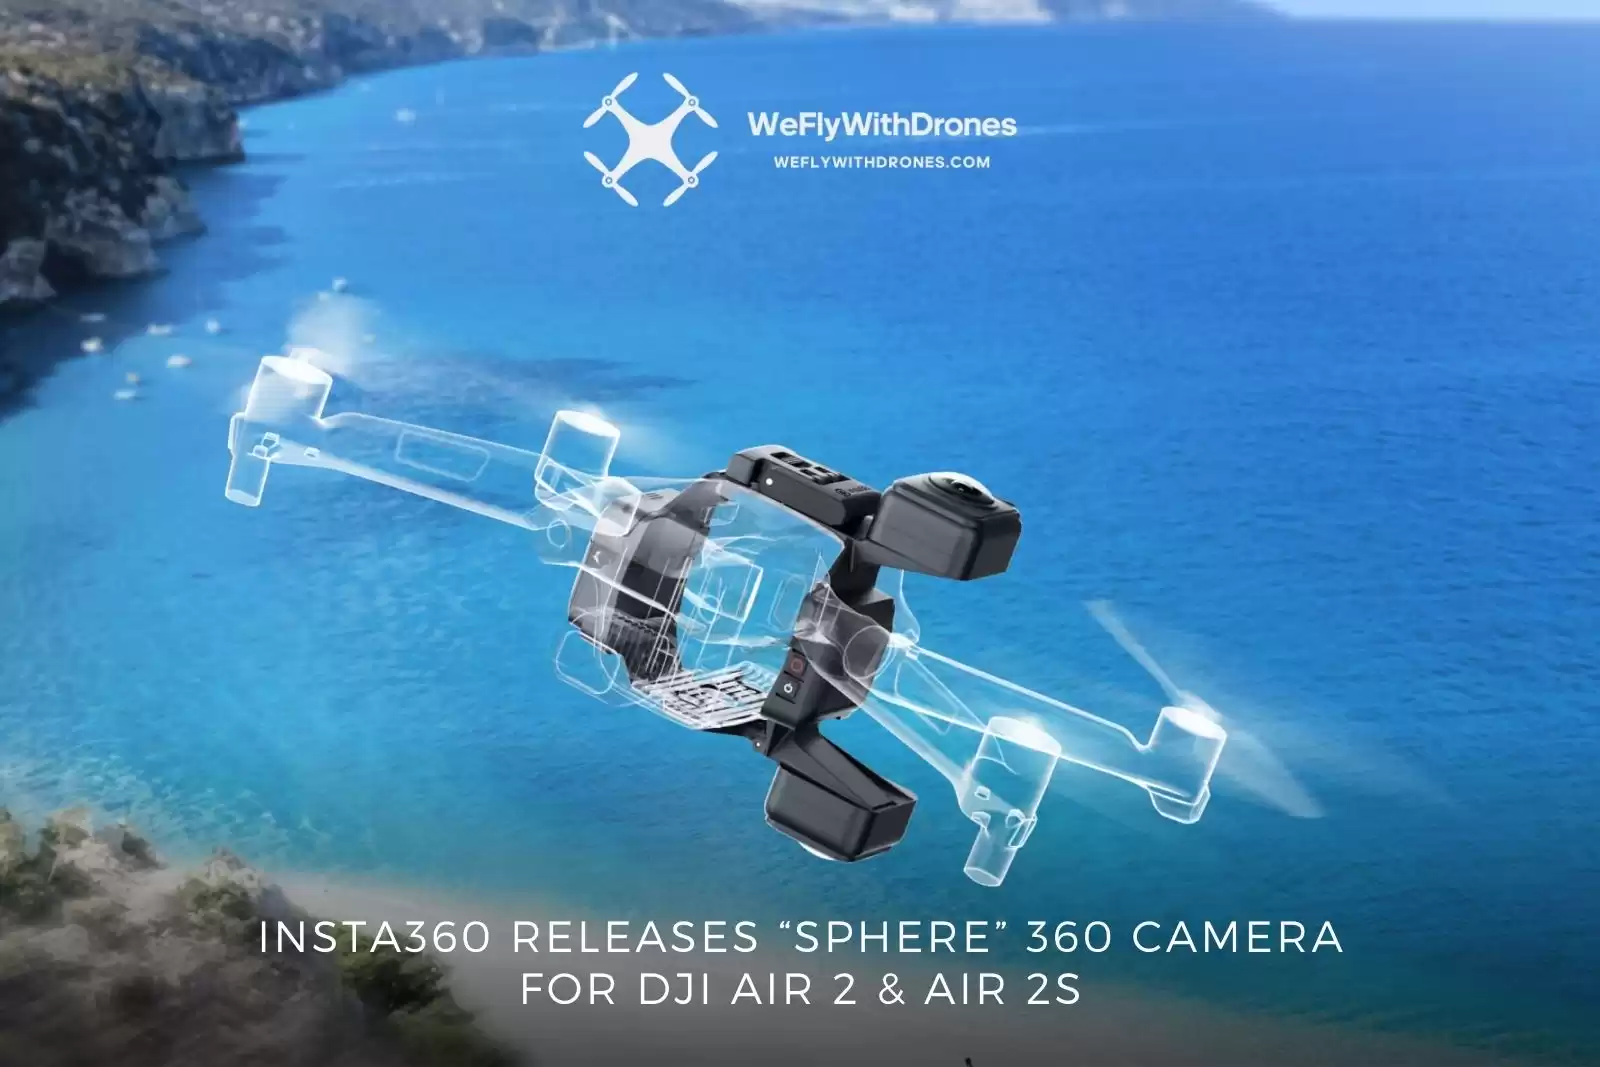 Revue de l'Insta360 Sphere : Drone invisible avec caméra 360